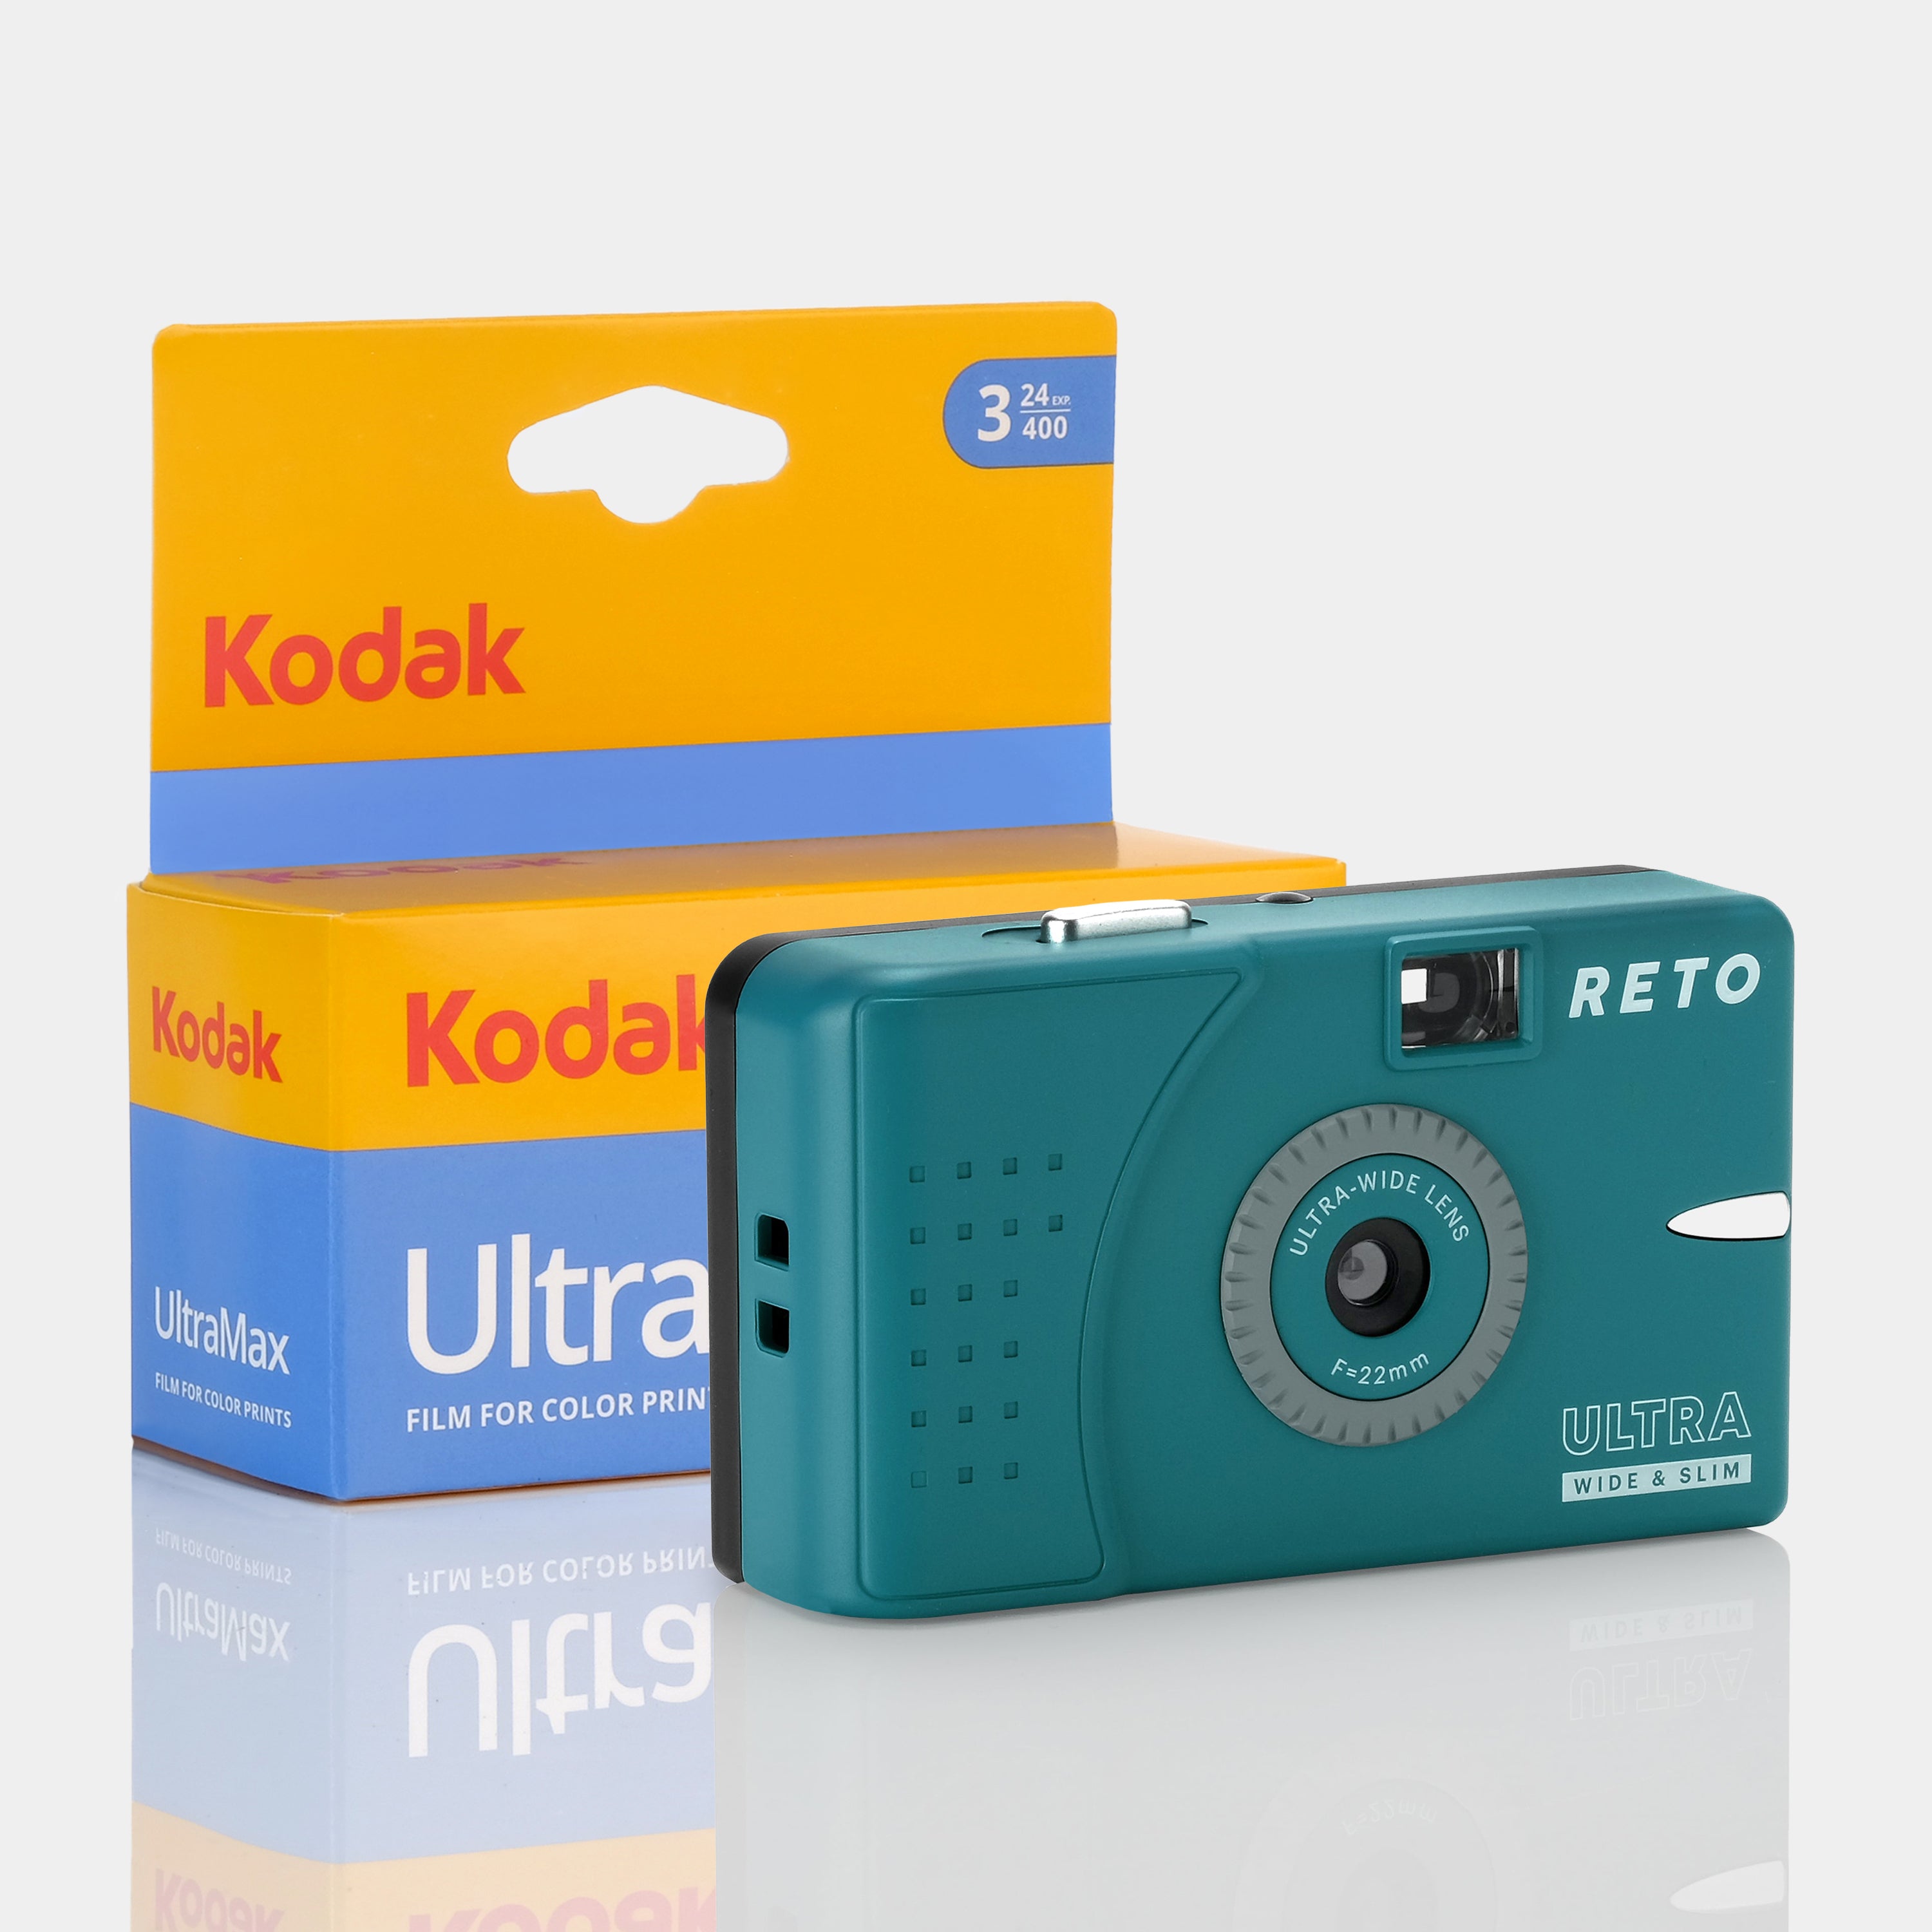 RETO Ultra Wide & Slim Murky Blue 35mm Film Camera With 3-Pack Kodak UltraMax Film